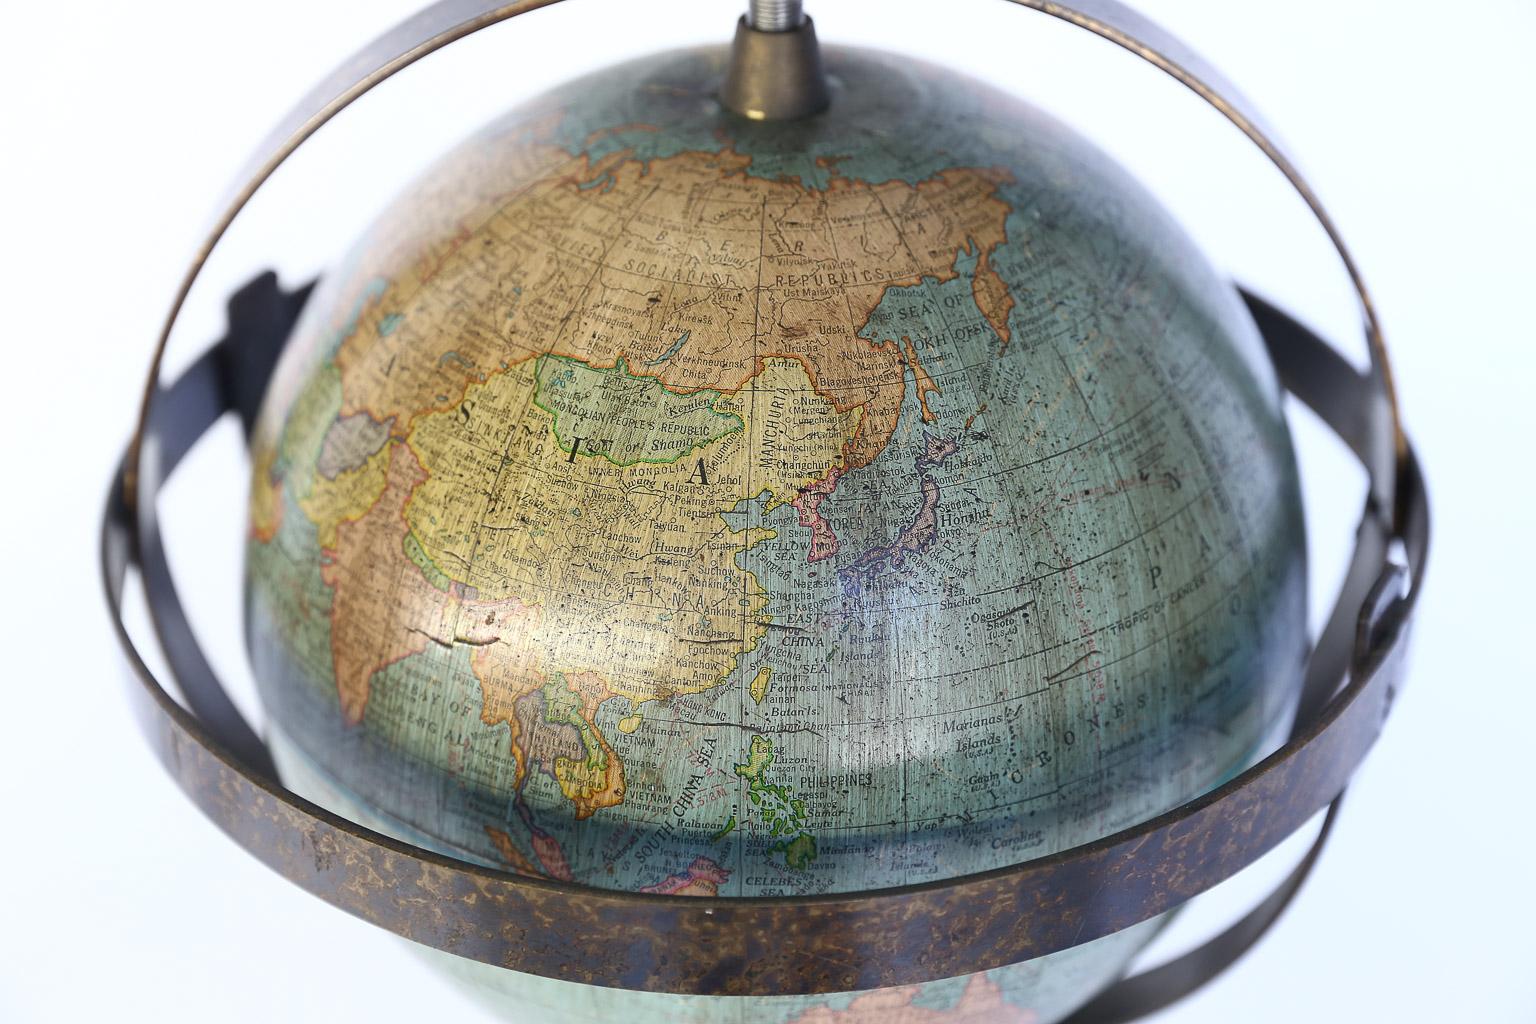 world globe lamp vintage